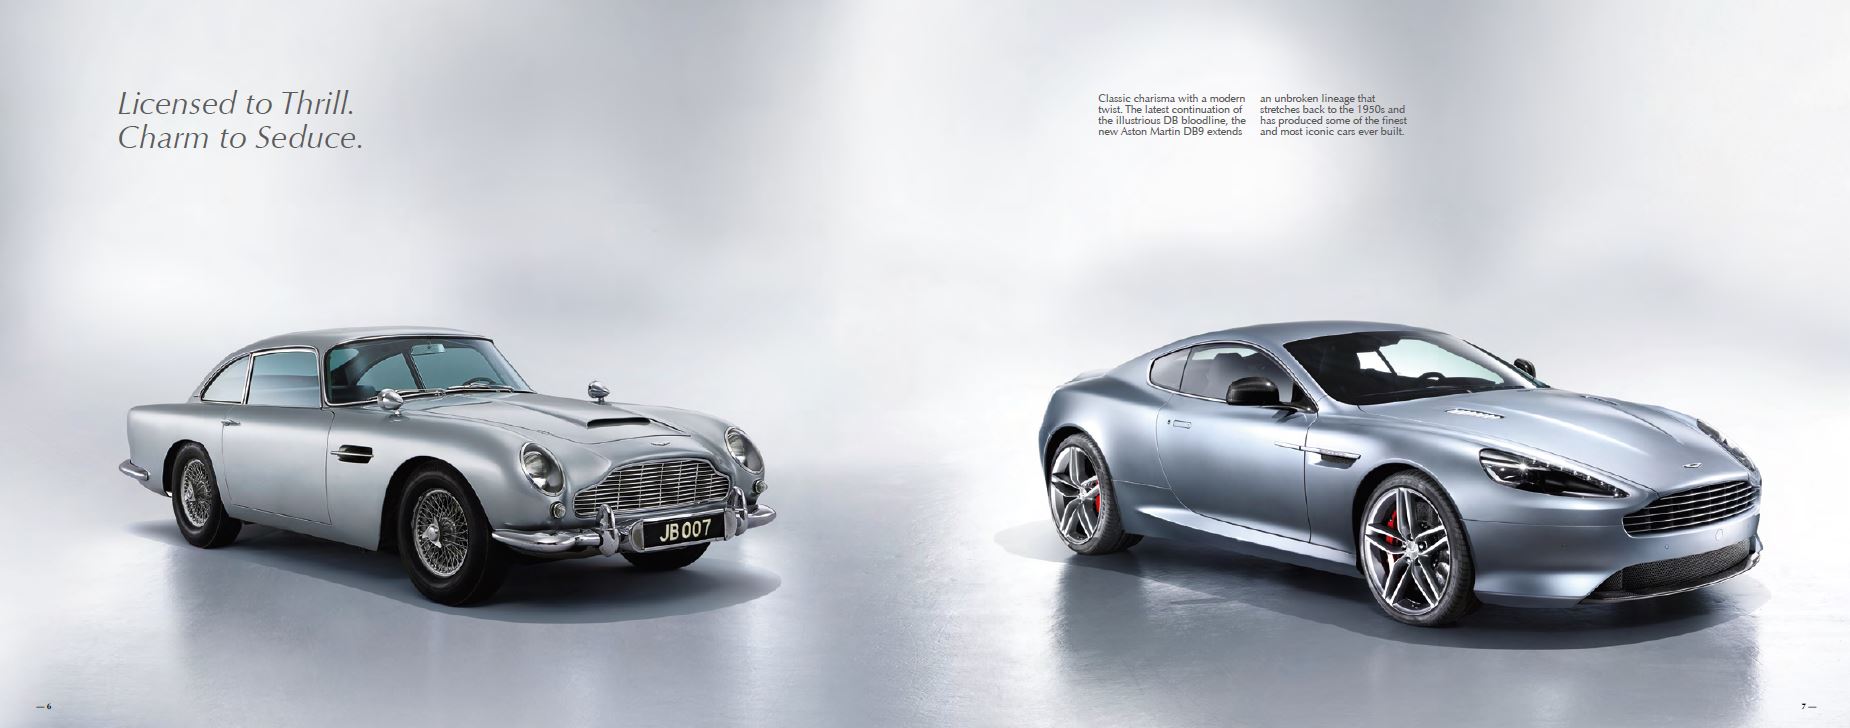 Aston Martin DB9 Pics, Vehicles Collection